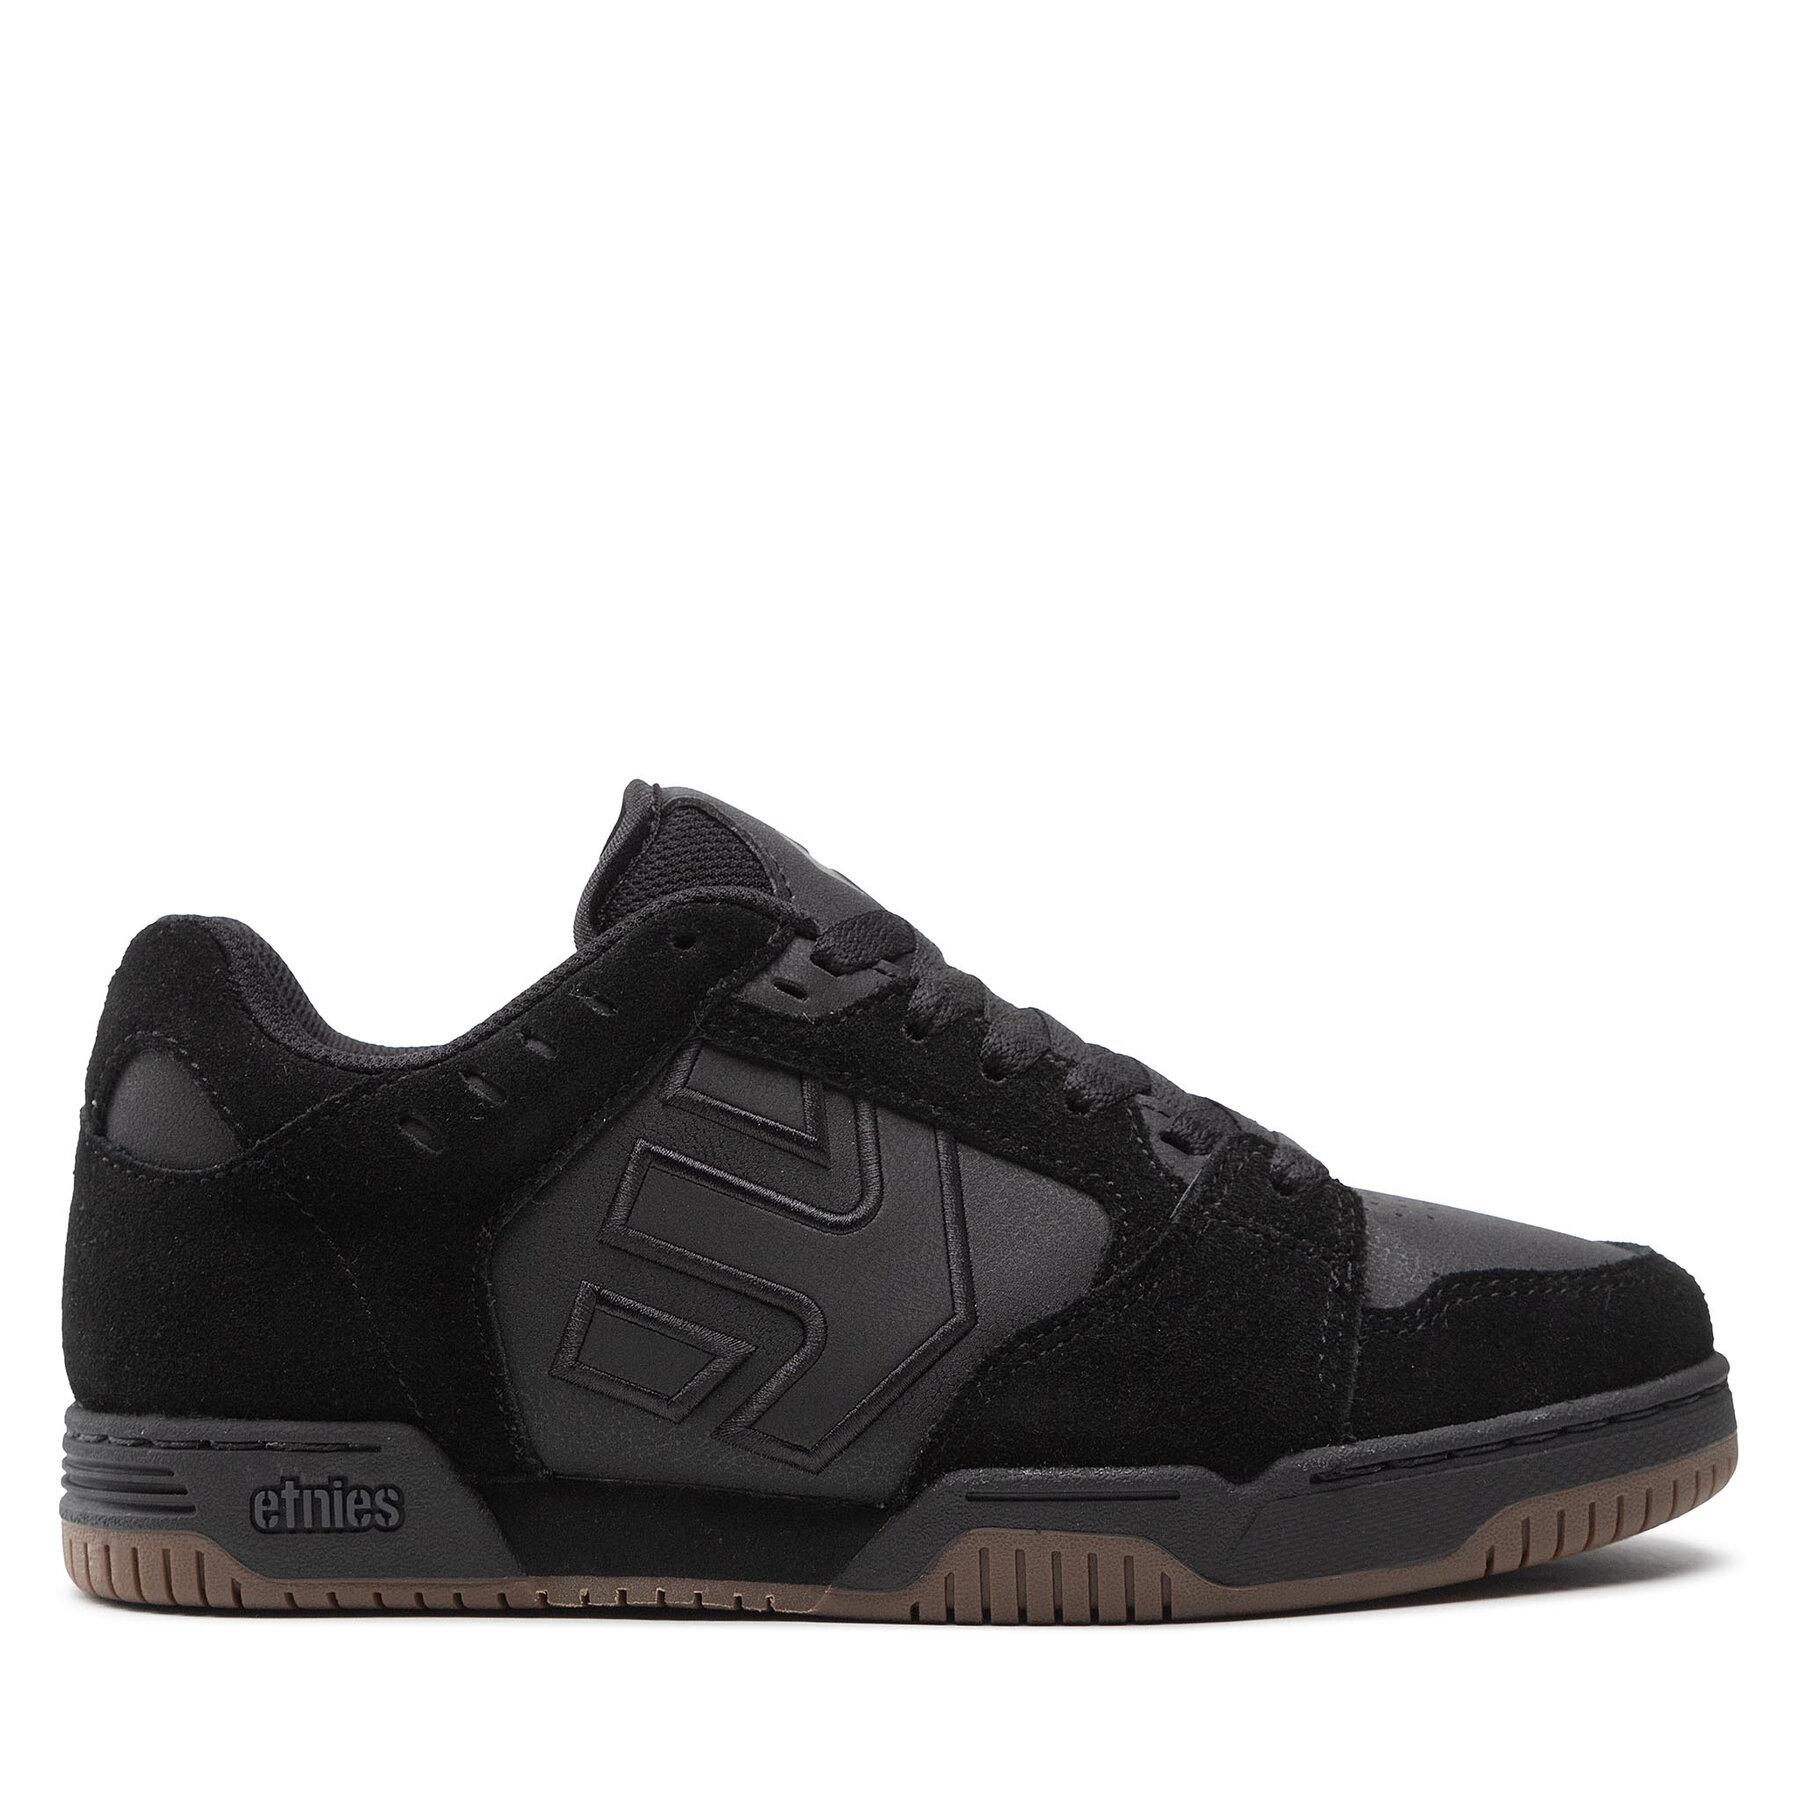 Sneakers Etnies Faze 4101000537 Black/Black/Gum 544 von Etnies